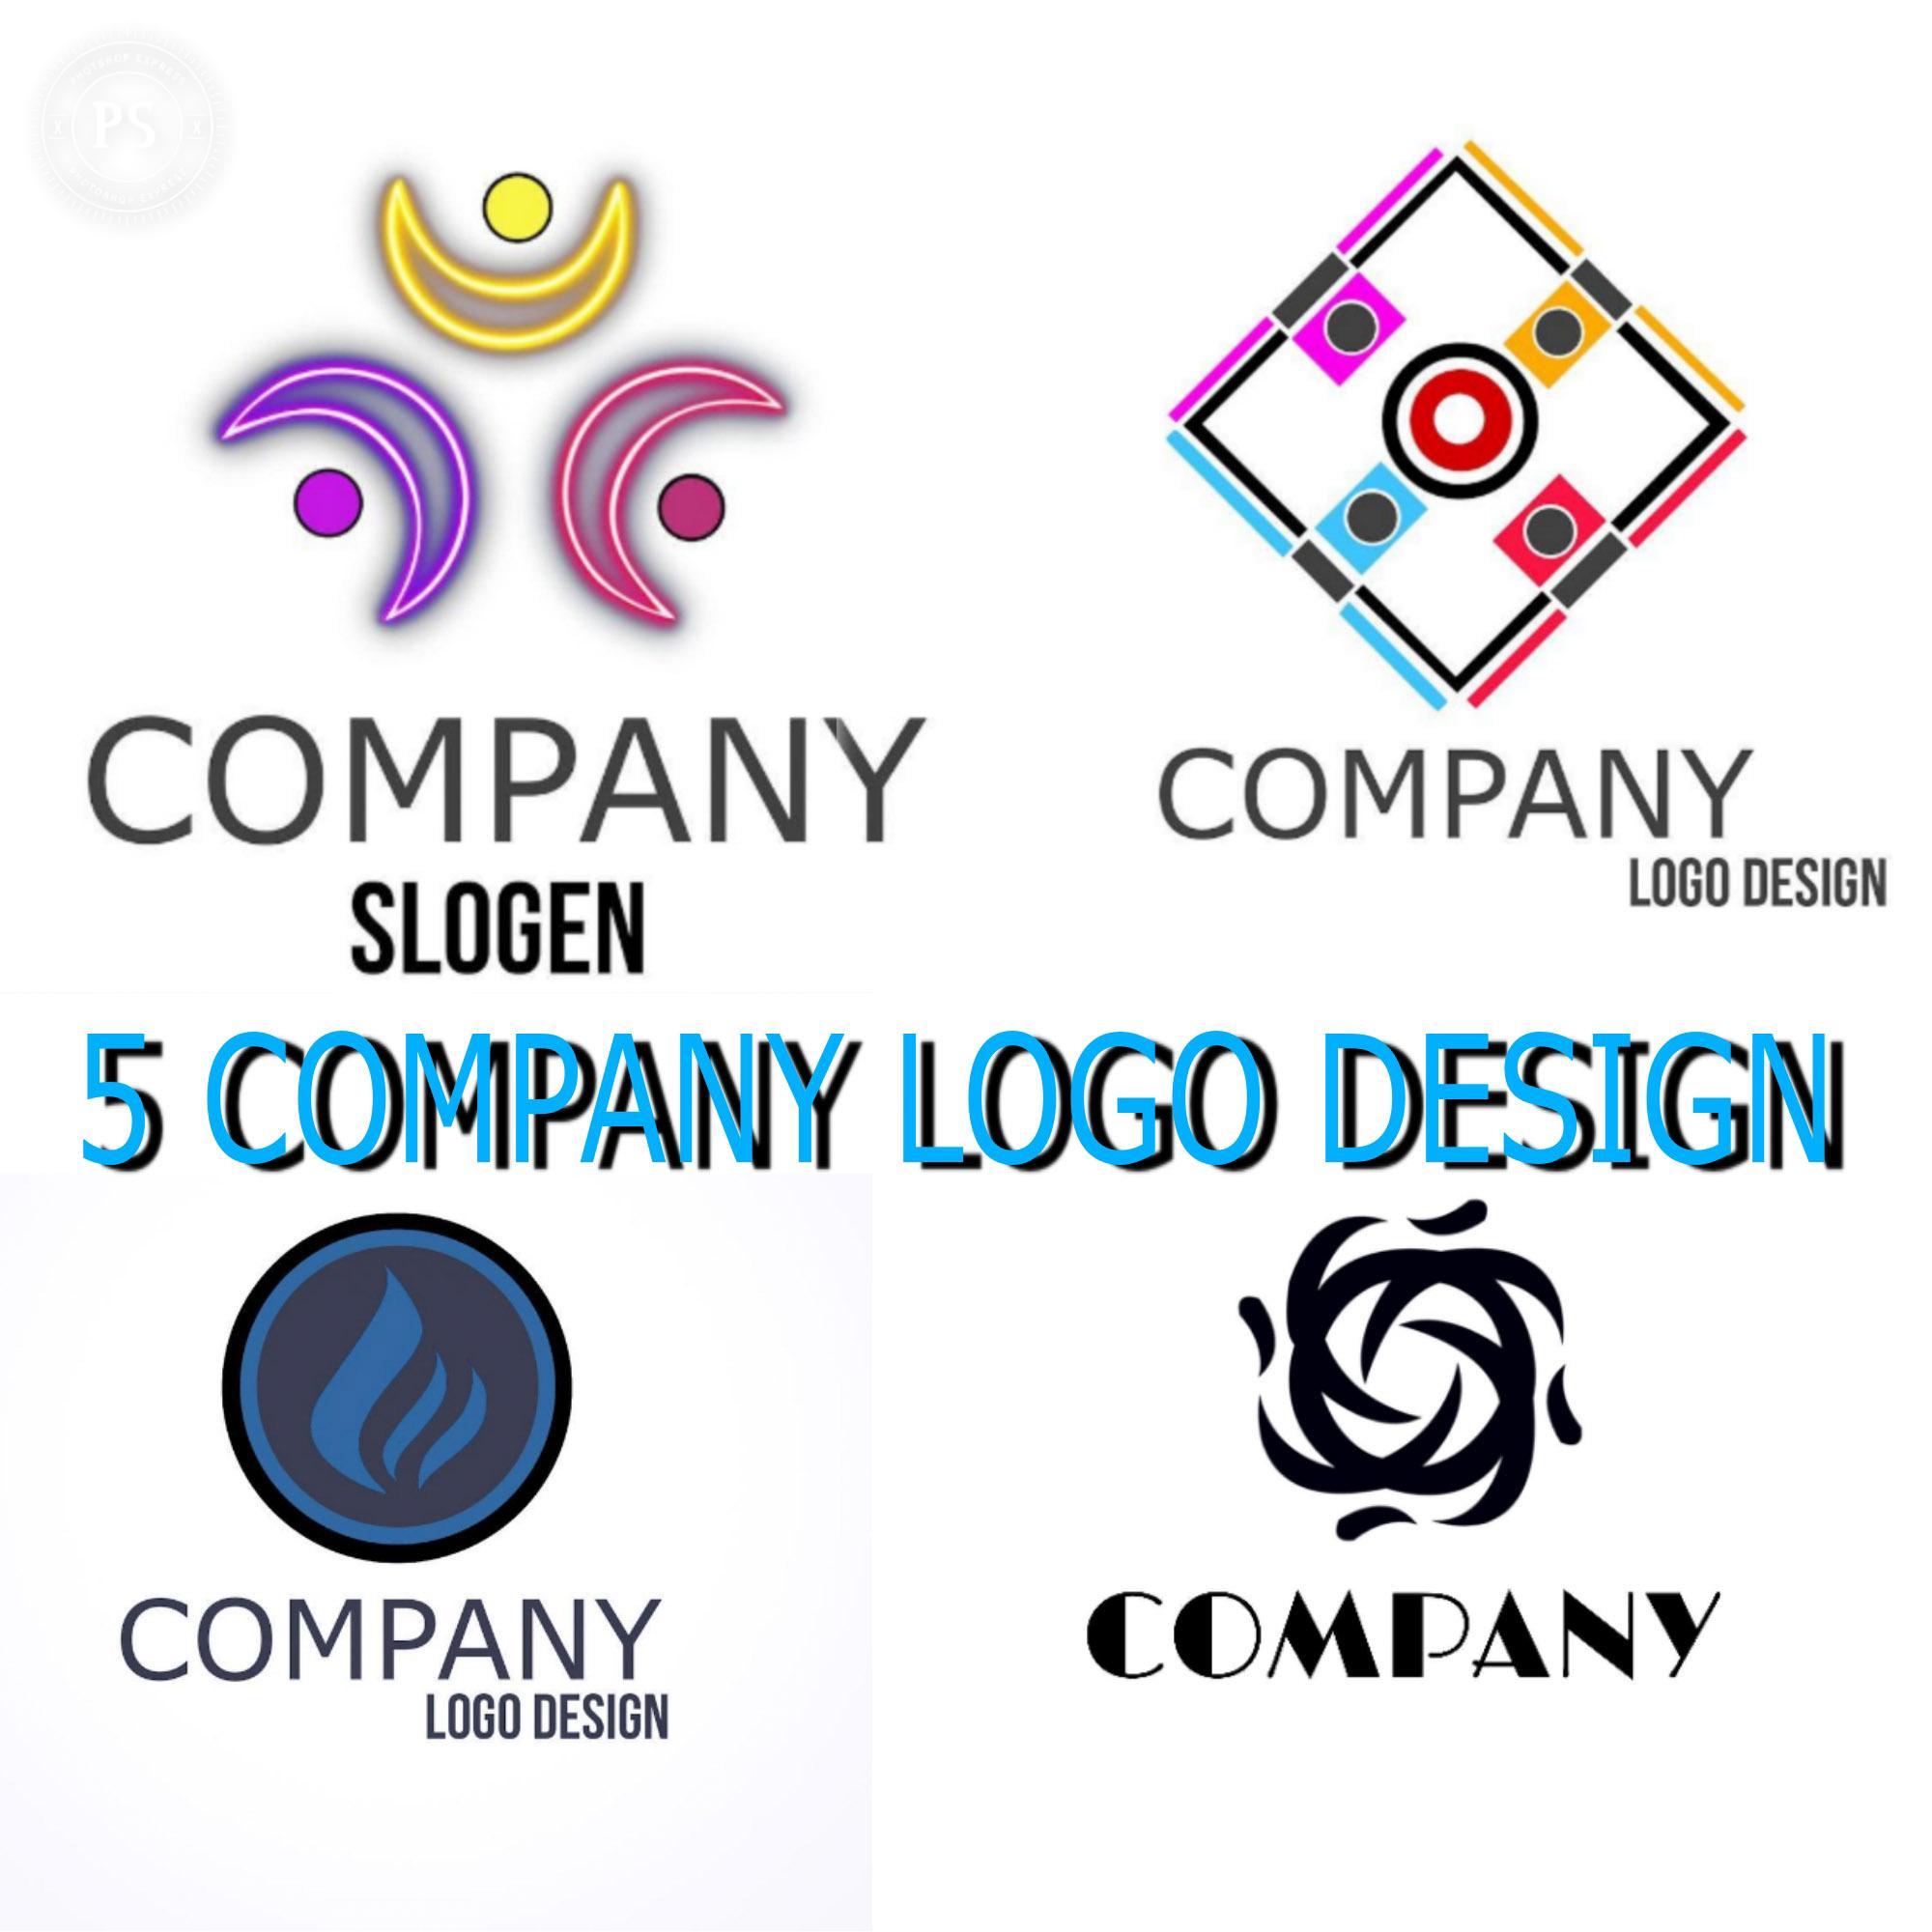 CREATIVE logo DESIGN cover image.